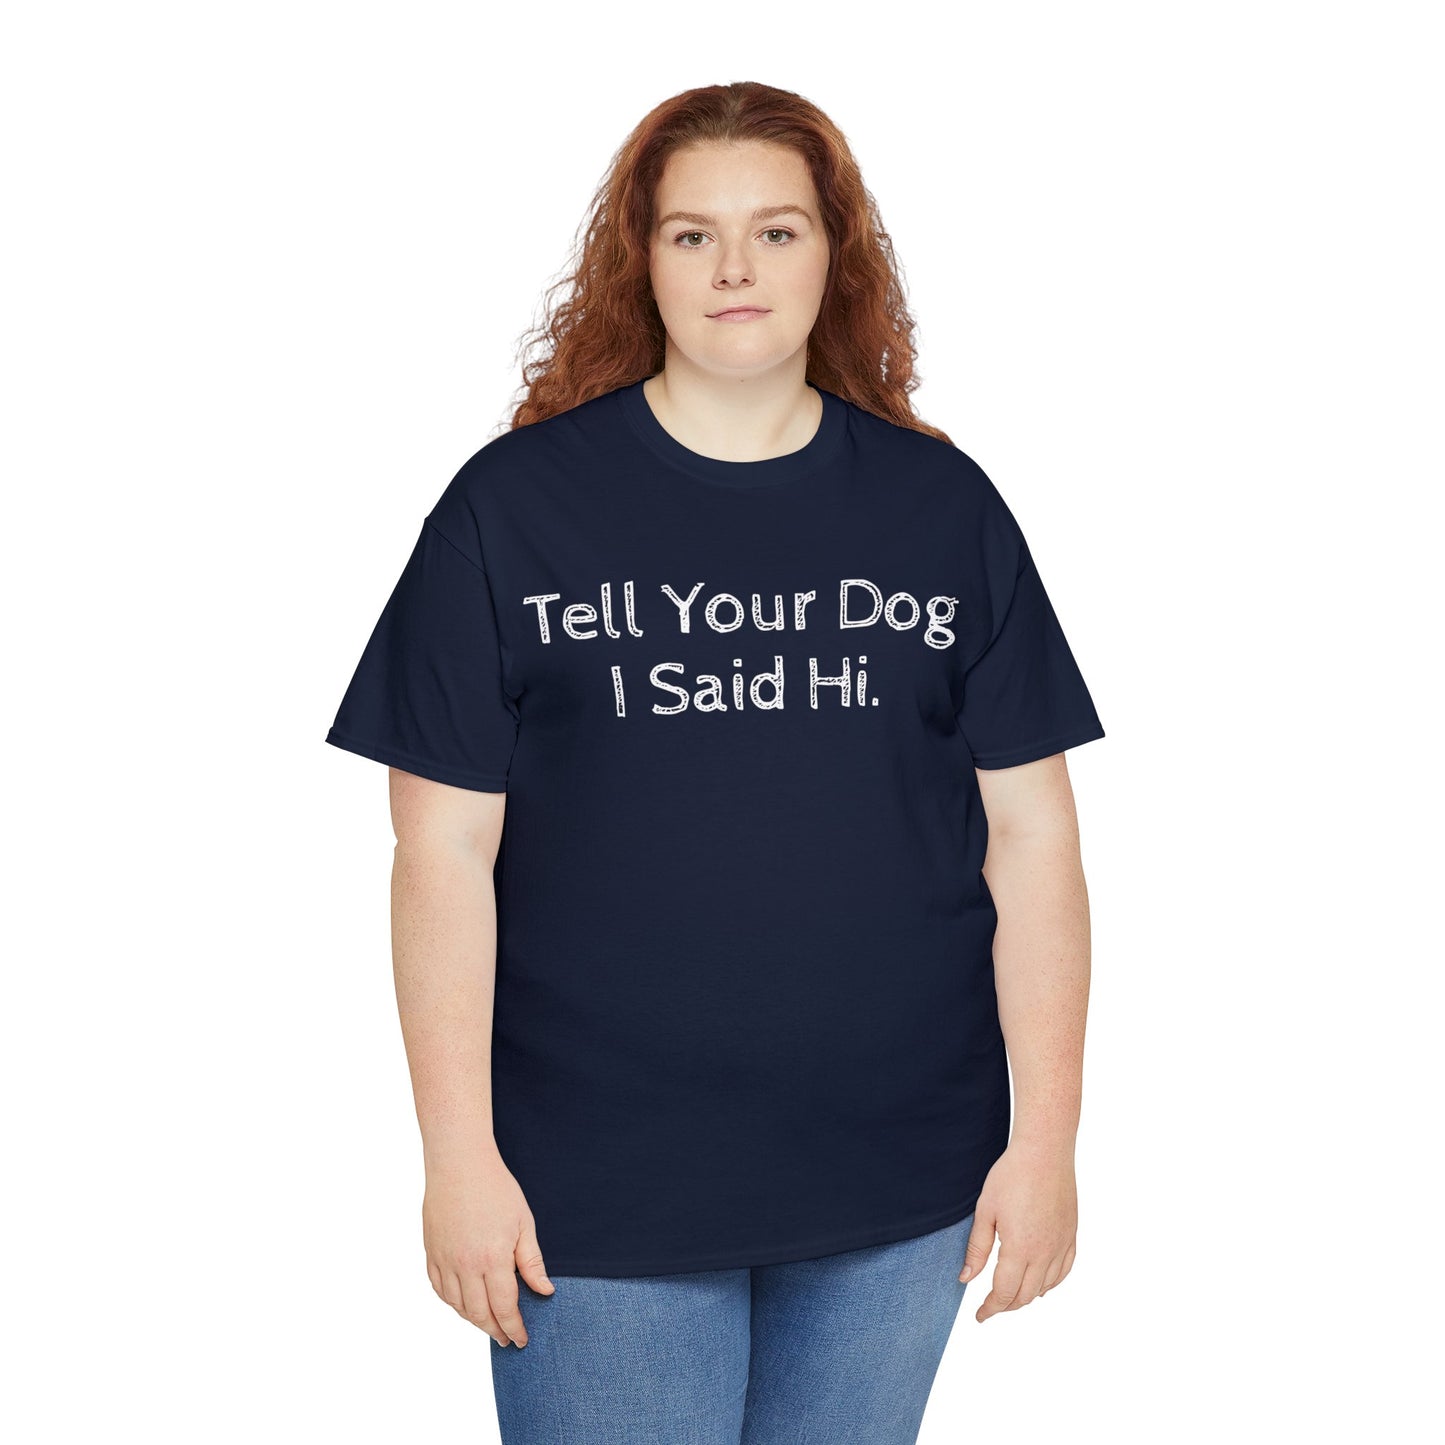 Funny Dog Sayings on t-shirts - Tell Your Dog I Said Hi